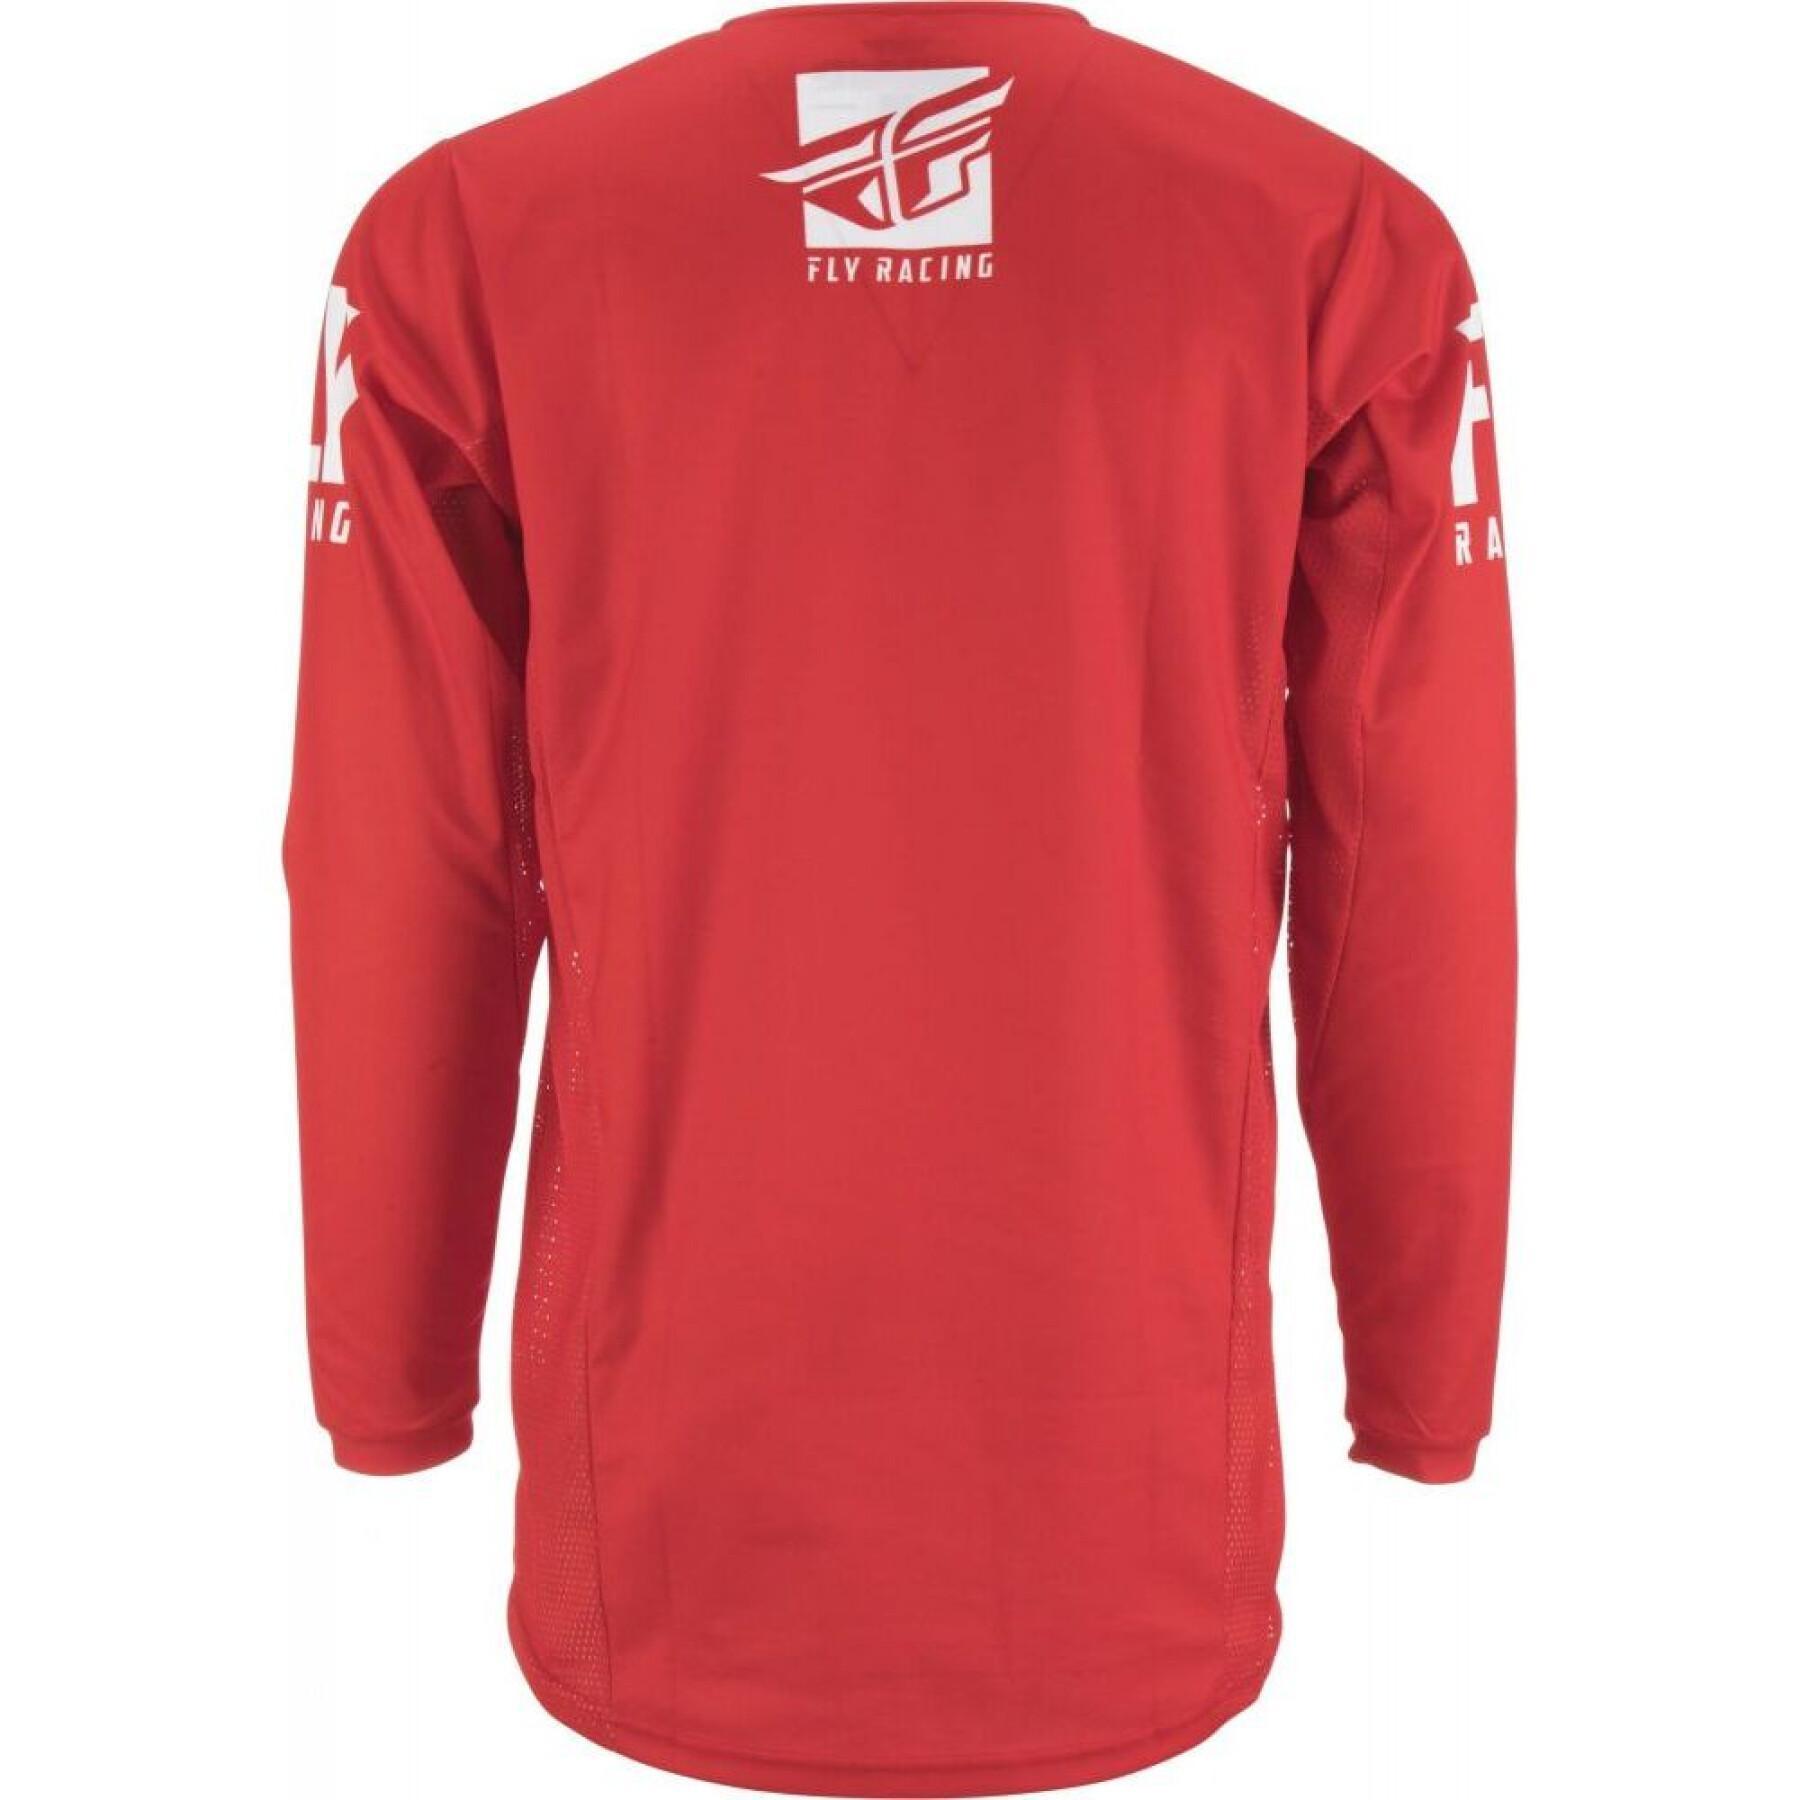 Camiseta Fly Racing Kinetic Shield 2019